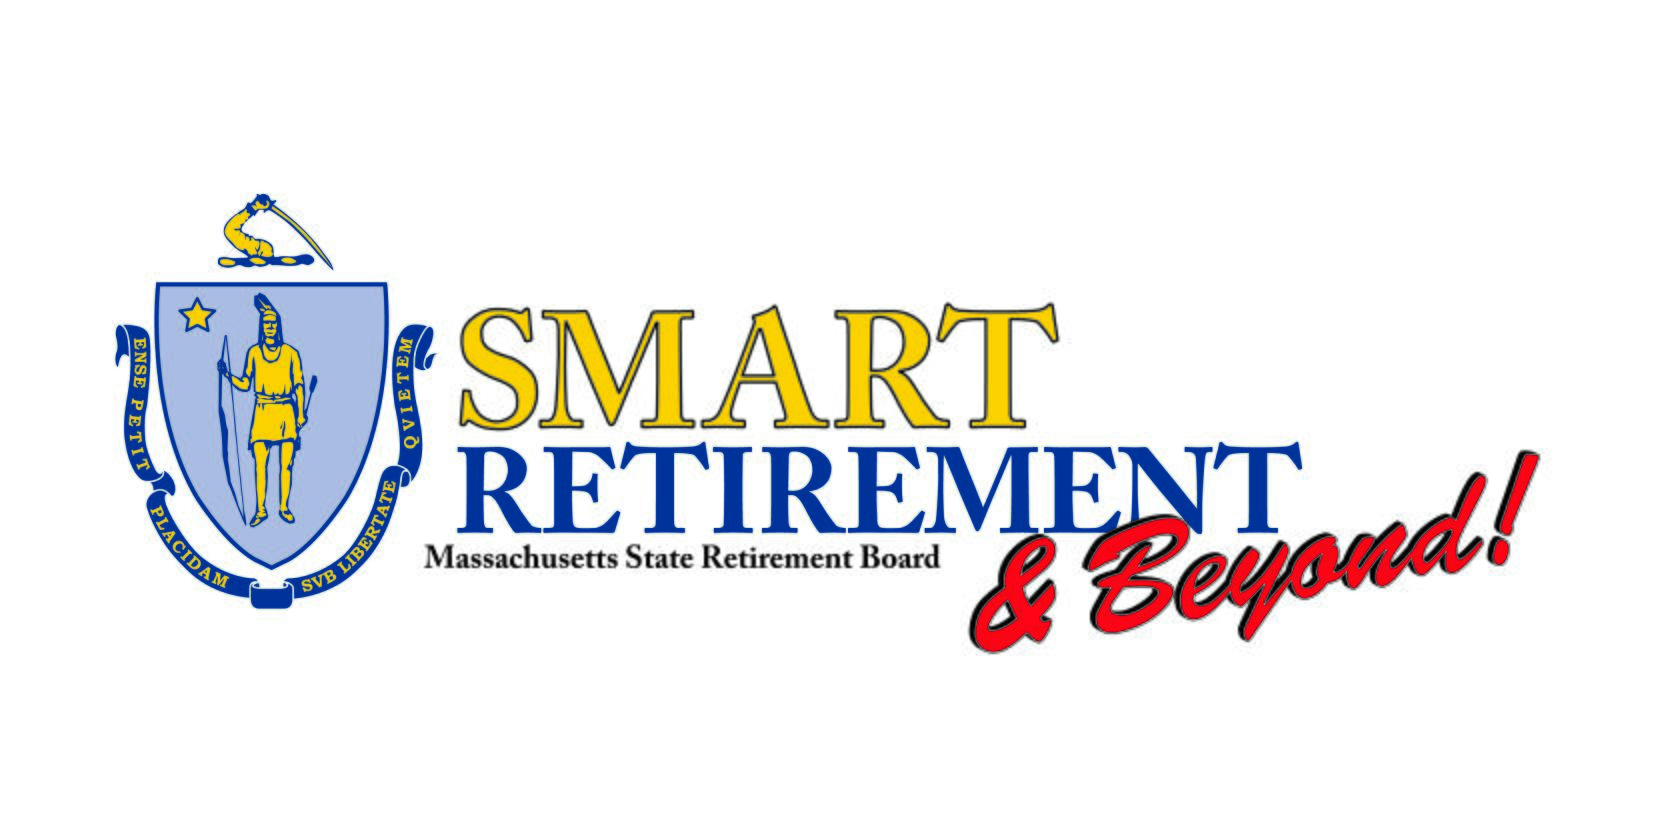 SMART Retirement & Beyond Seminar Logo